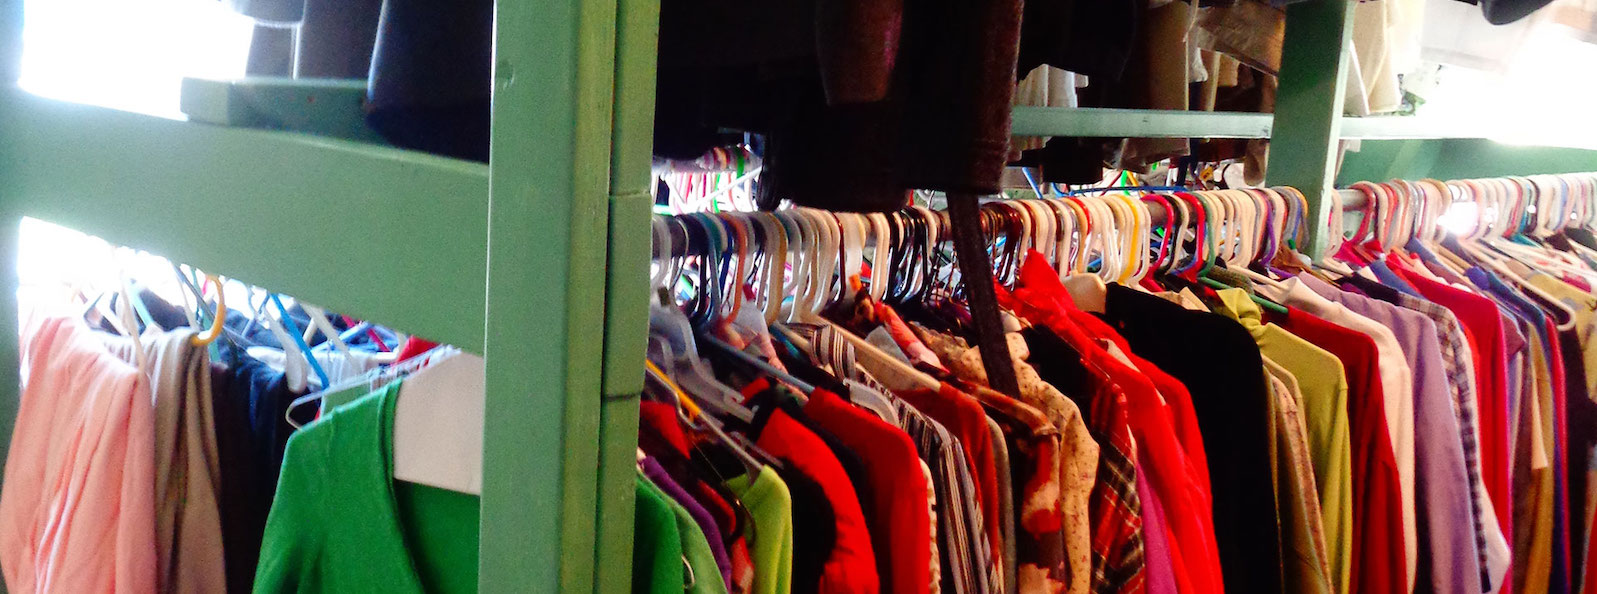 Clothes Closet at the Baldwin Center.